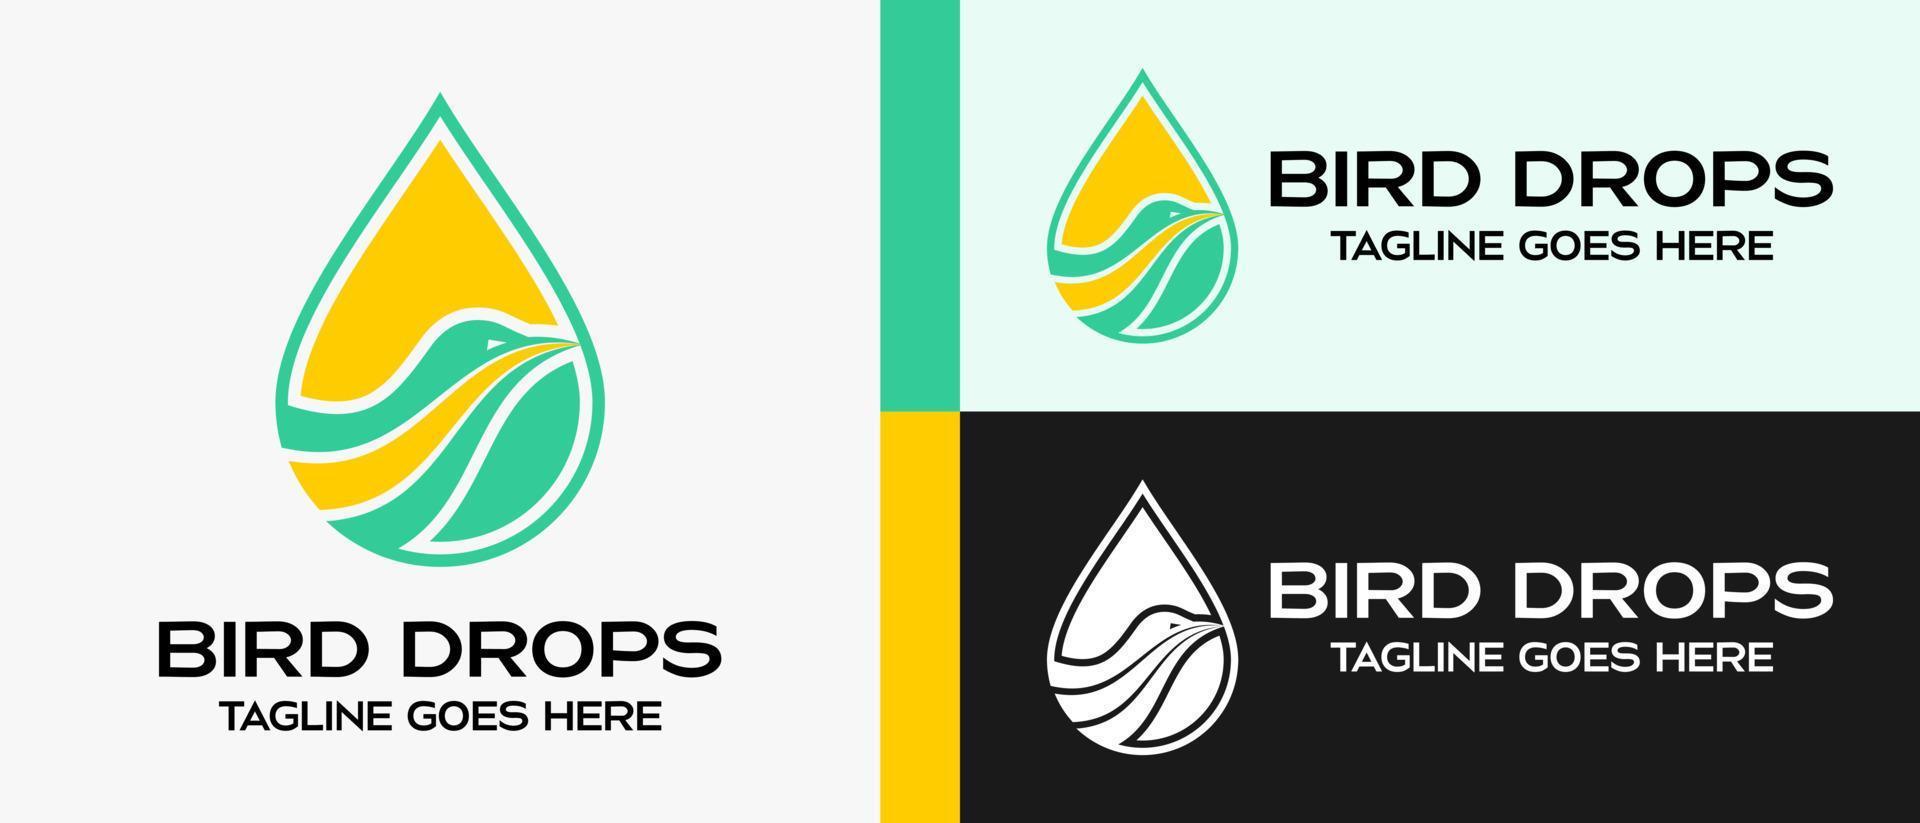 bird's head logo design template in water drops. vector creative logo illustration